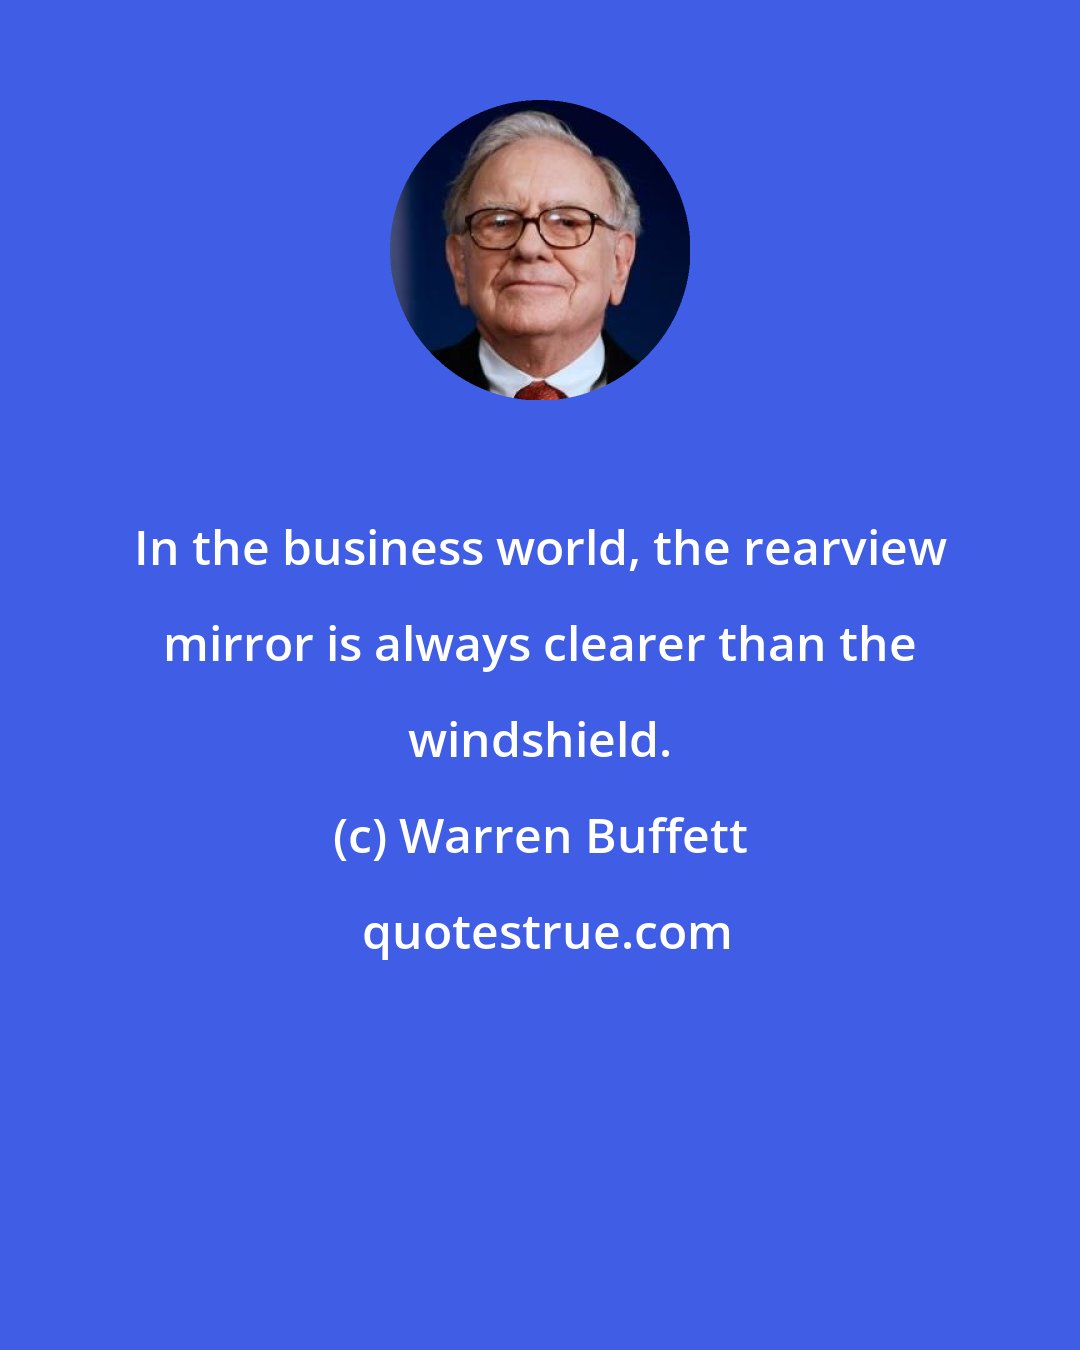 Warren Buffett: In the business world, the rearview mirror is always clearer than the windshield.